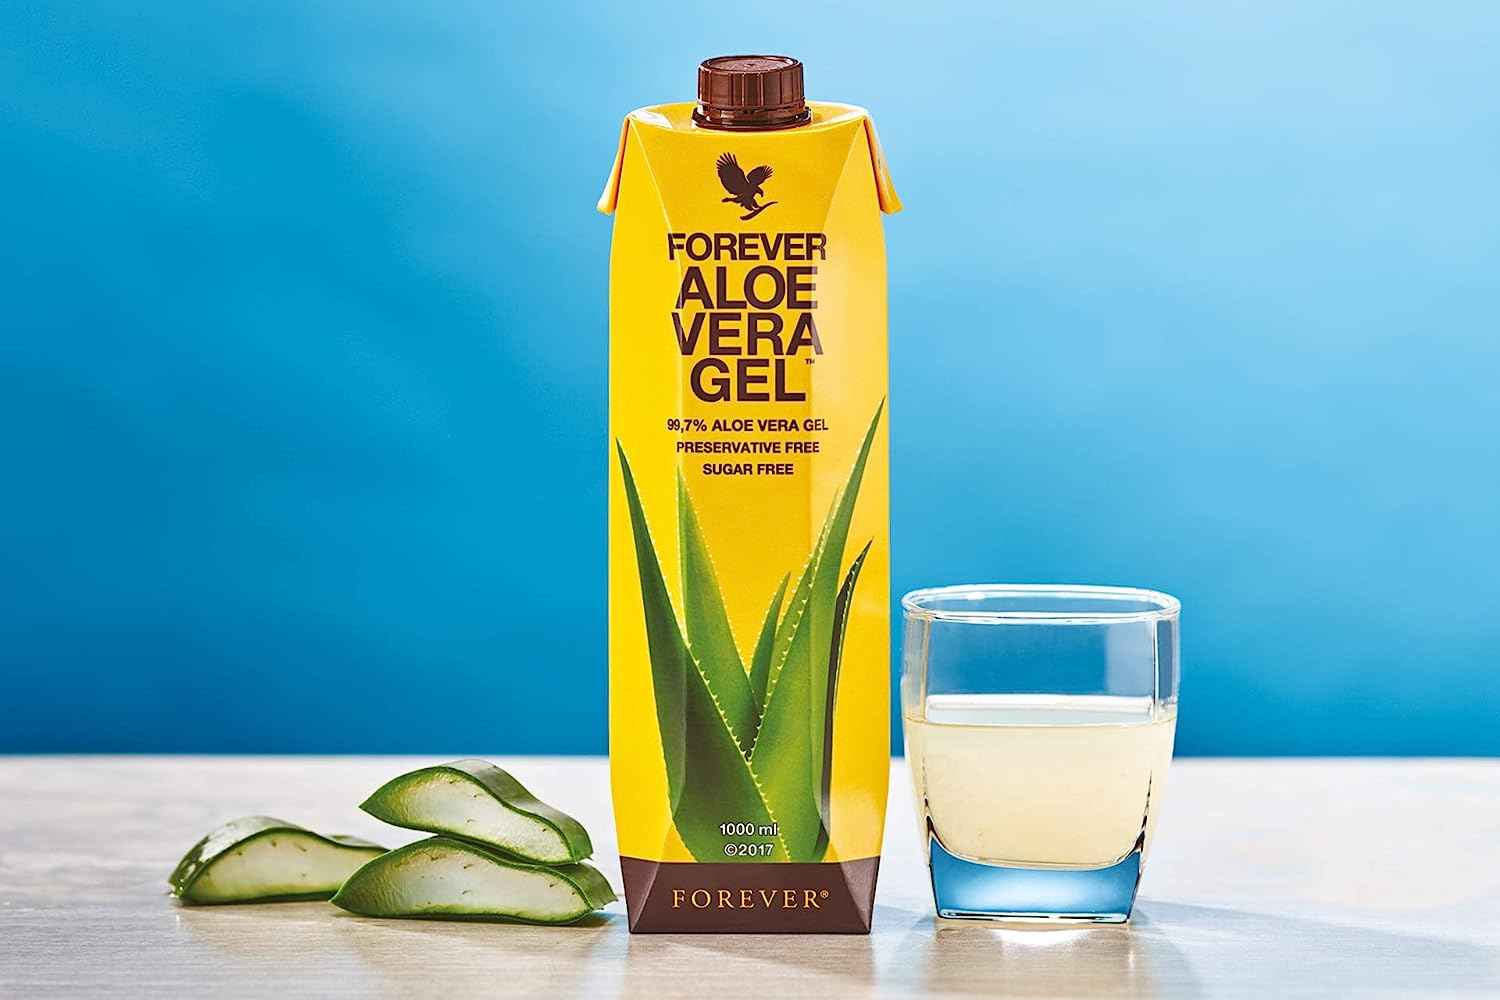 Forever Aloe Vera Gel: The Best-Selling Aloe Vera Gel in the World